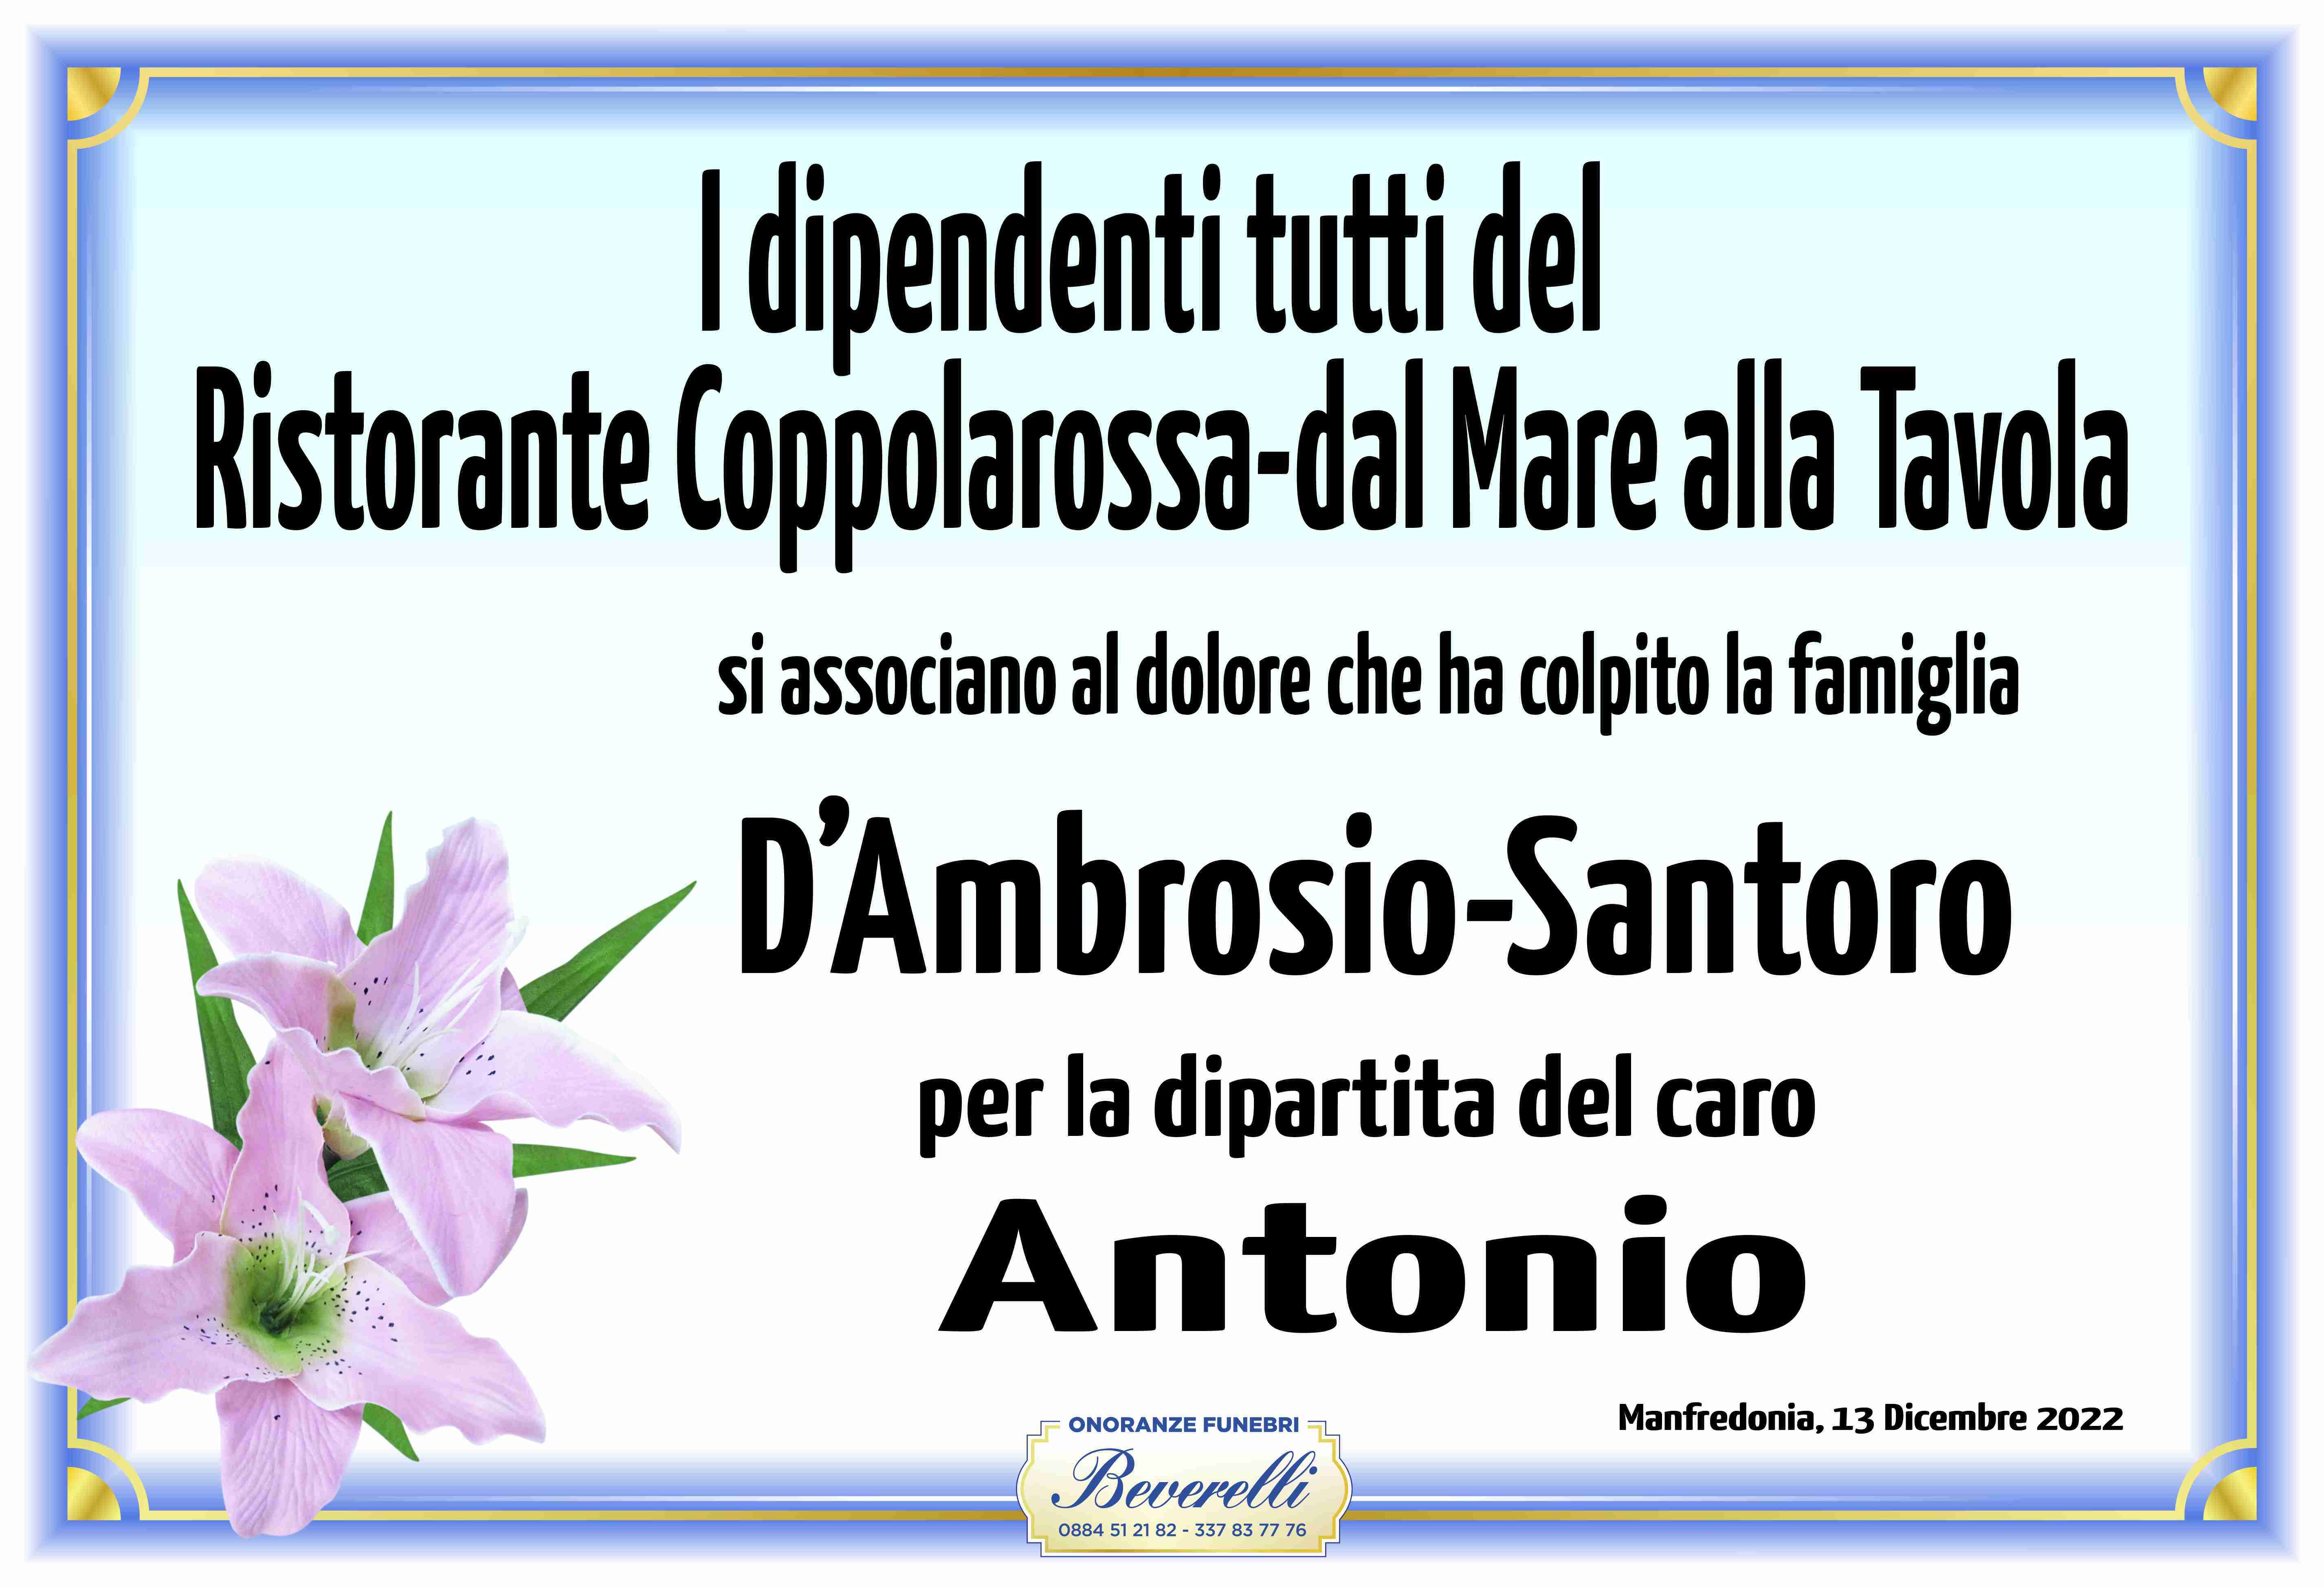 Antonio D'Ambrosio